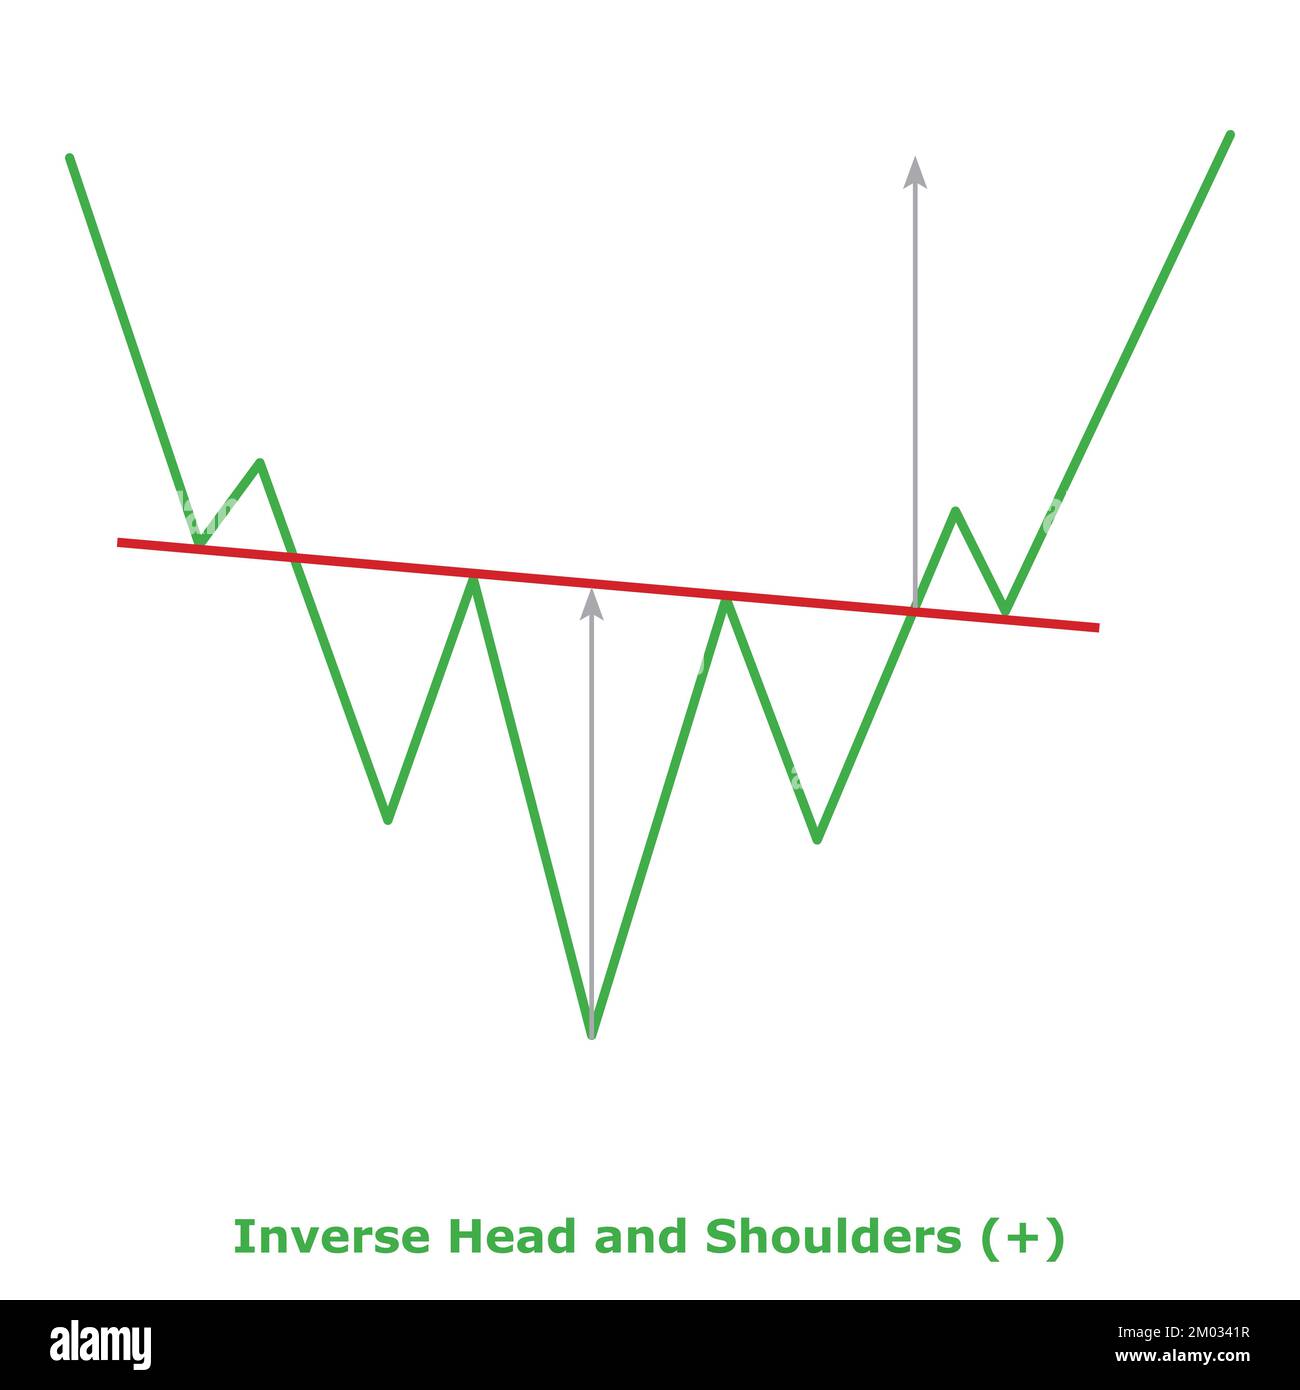 Inverse Head and Shoulders - Bullish (+) - Small Illustration - Green & Red - Bullish Reversal Chart Patterns - Technical Analysis Stock Vector